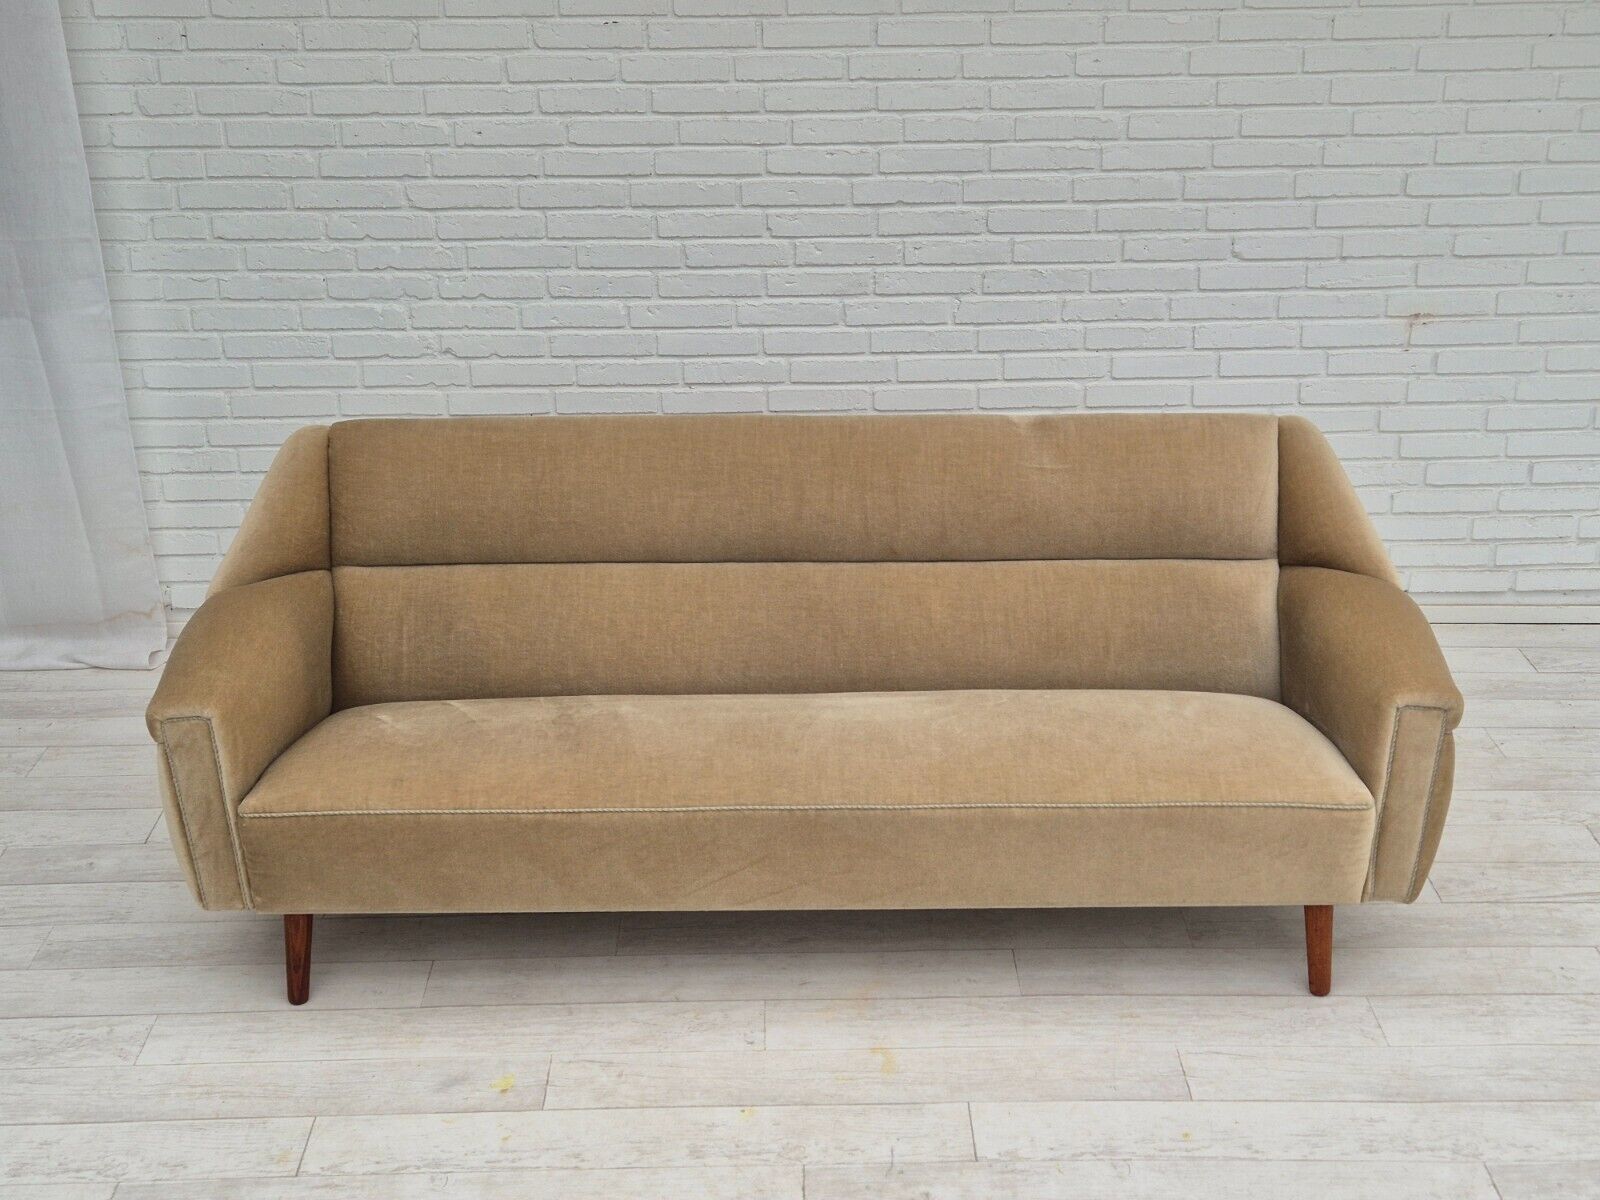 1960s Danish design by Kurt Østervig for Rolschau Møbler 3 seater sofa